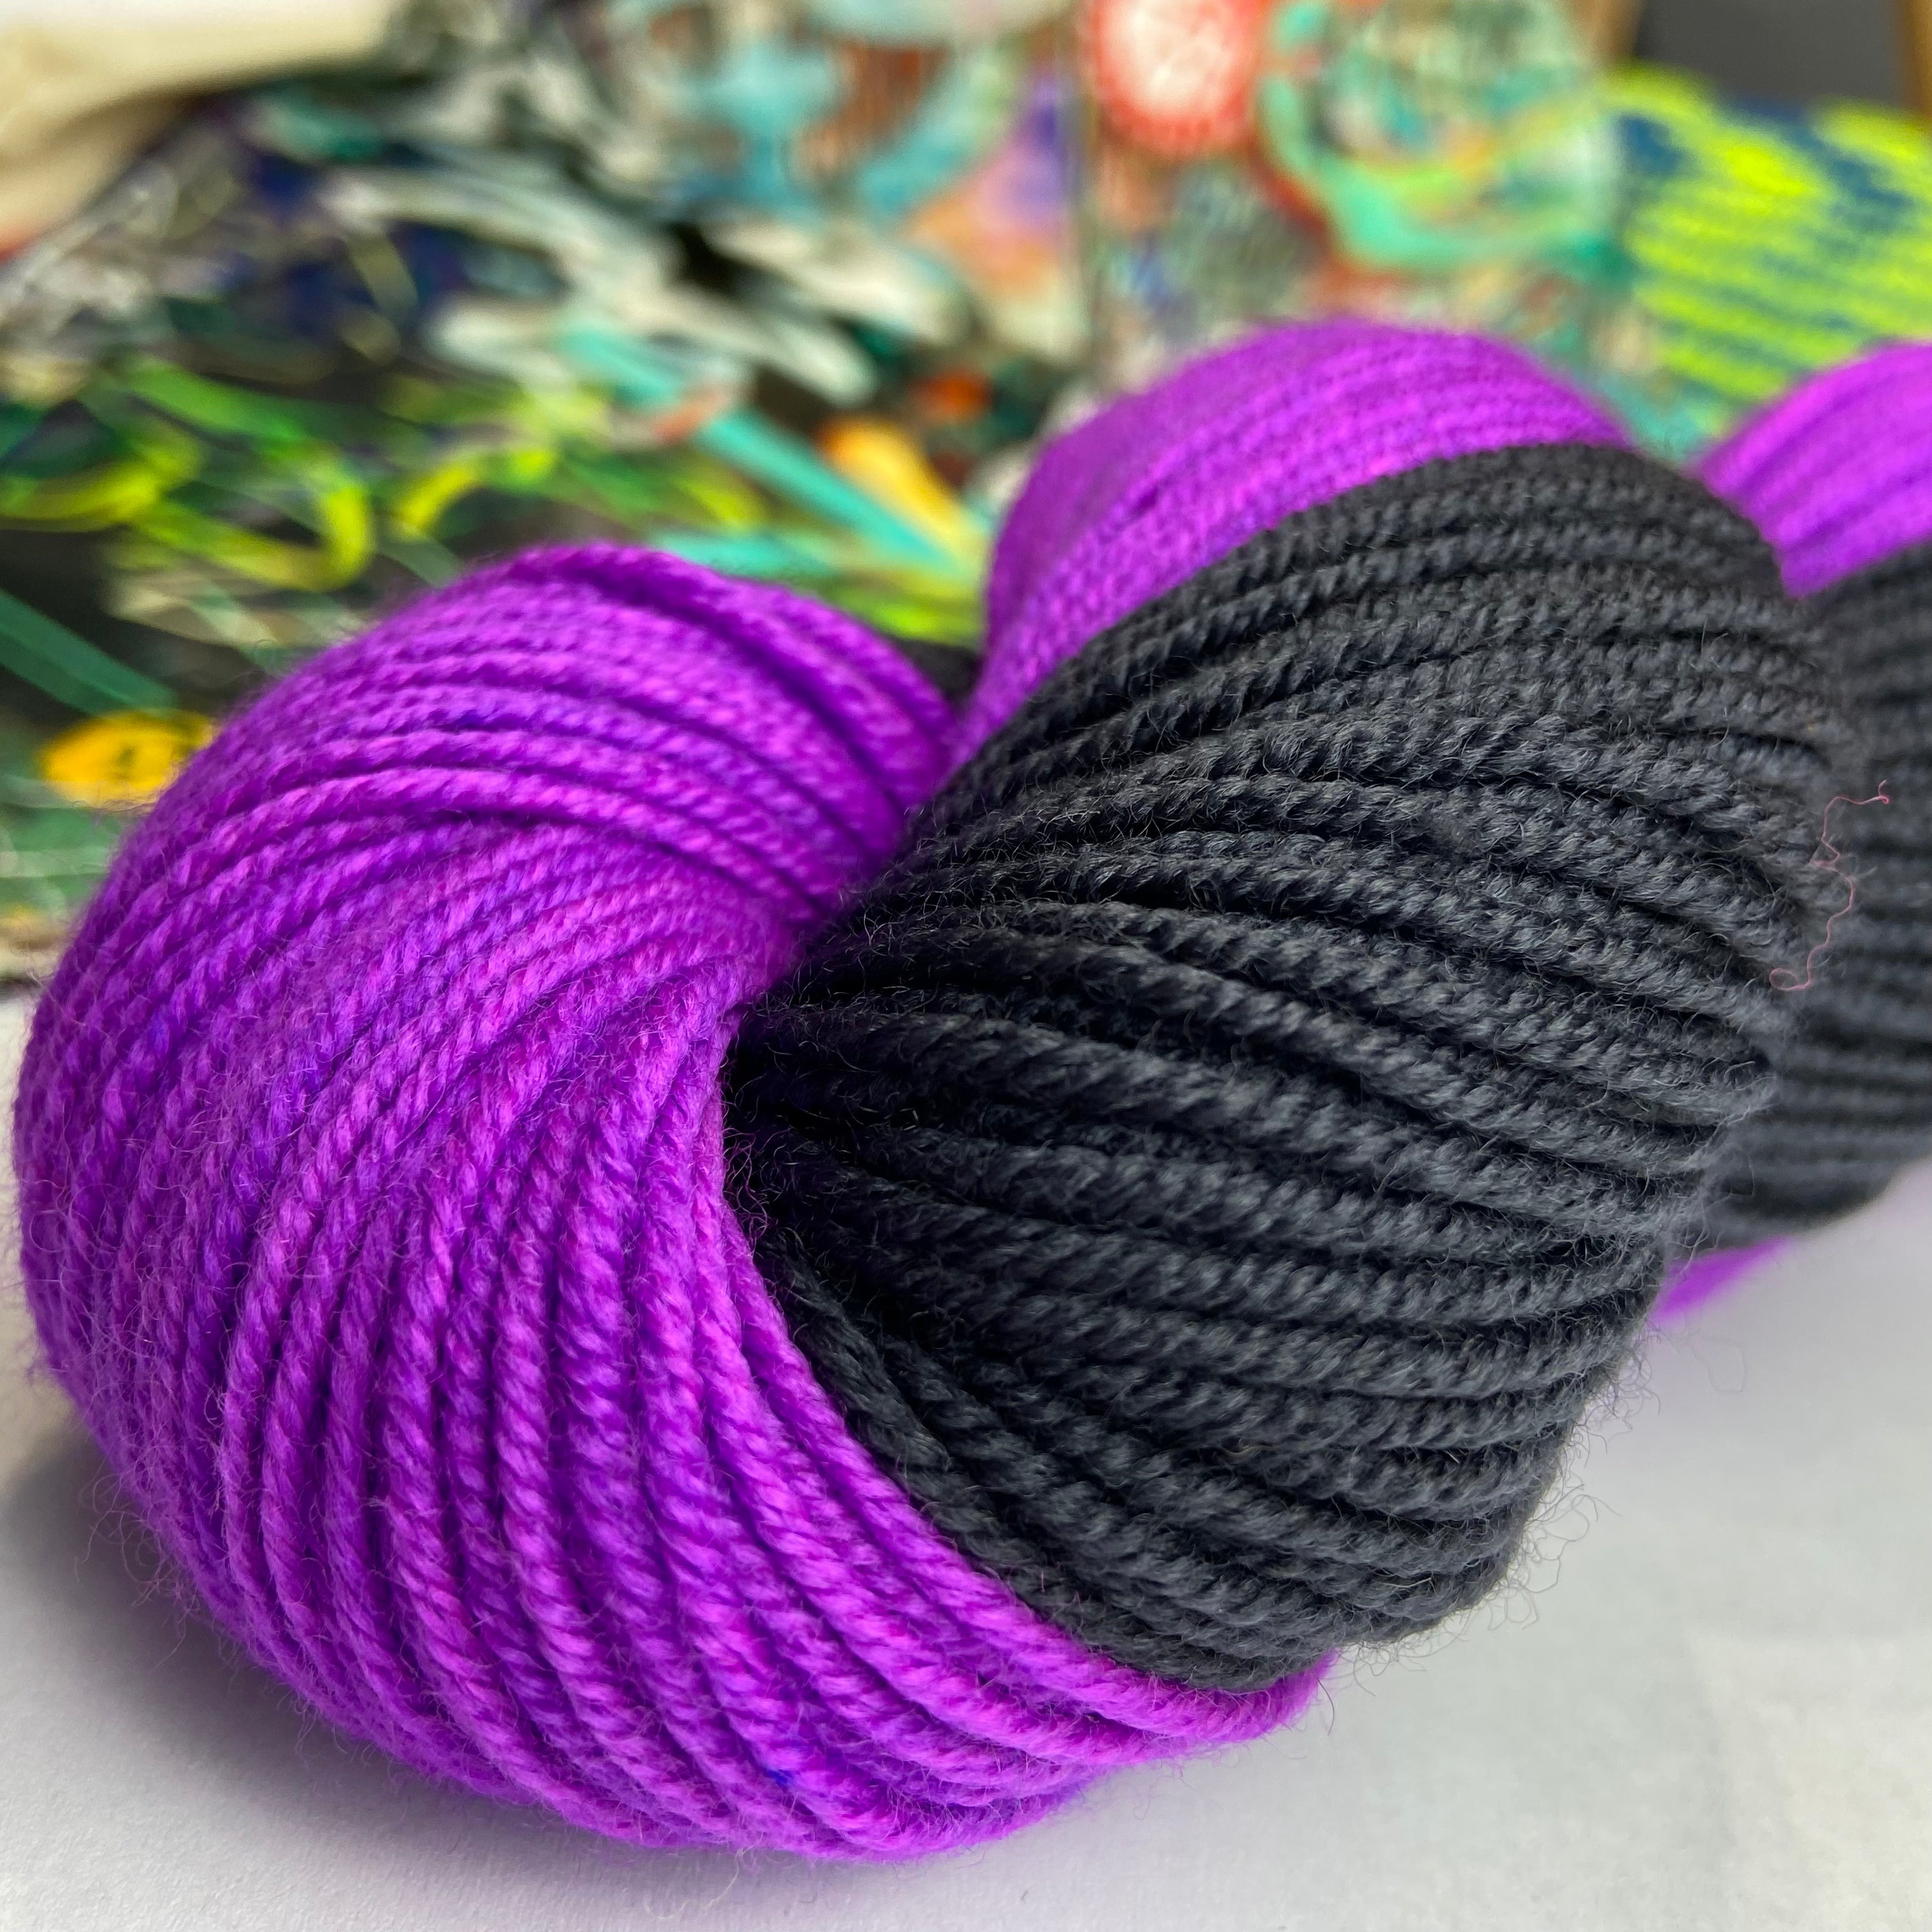 Ziggy Shadow Cowl Kit - Yarn, Knitting Pattern & Optional Project Bag